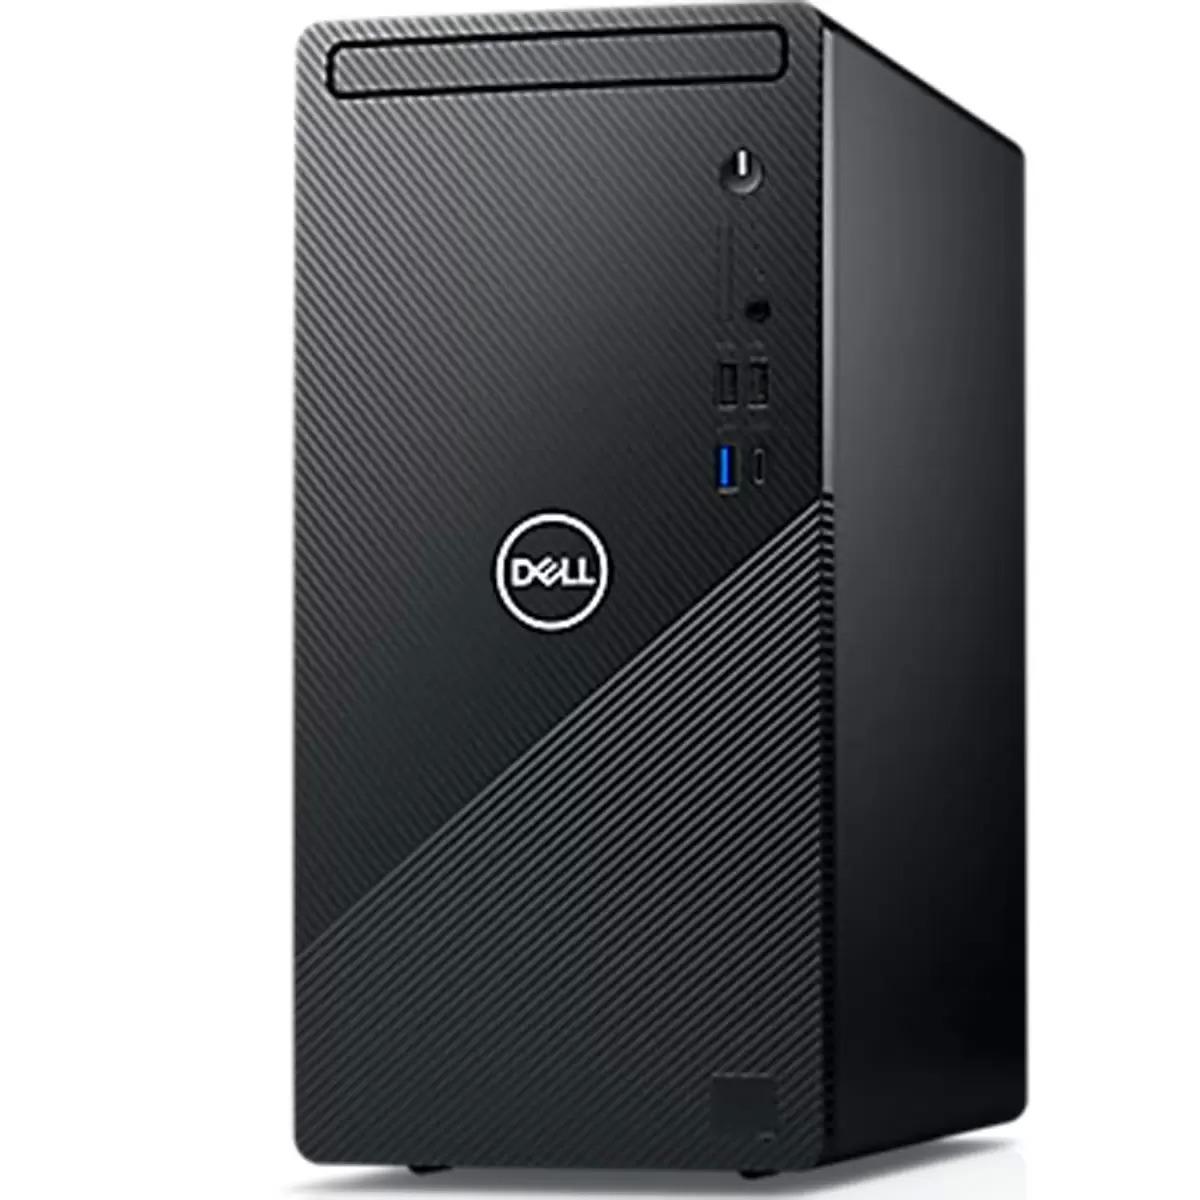 Dell Inspiron 3891 i7 12GB 512GB GTX1650 Desktop Computer for $685.99 Shipped